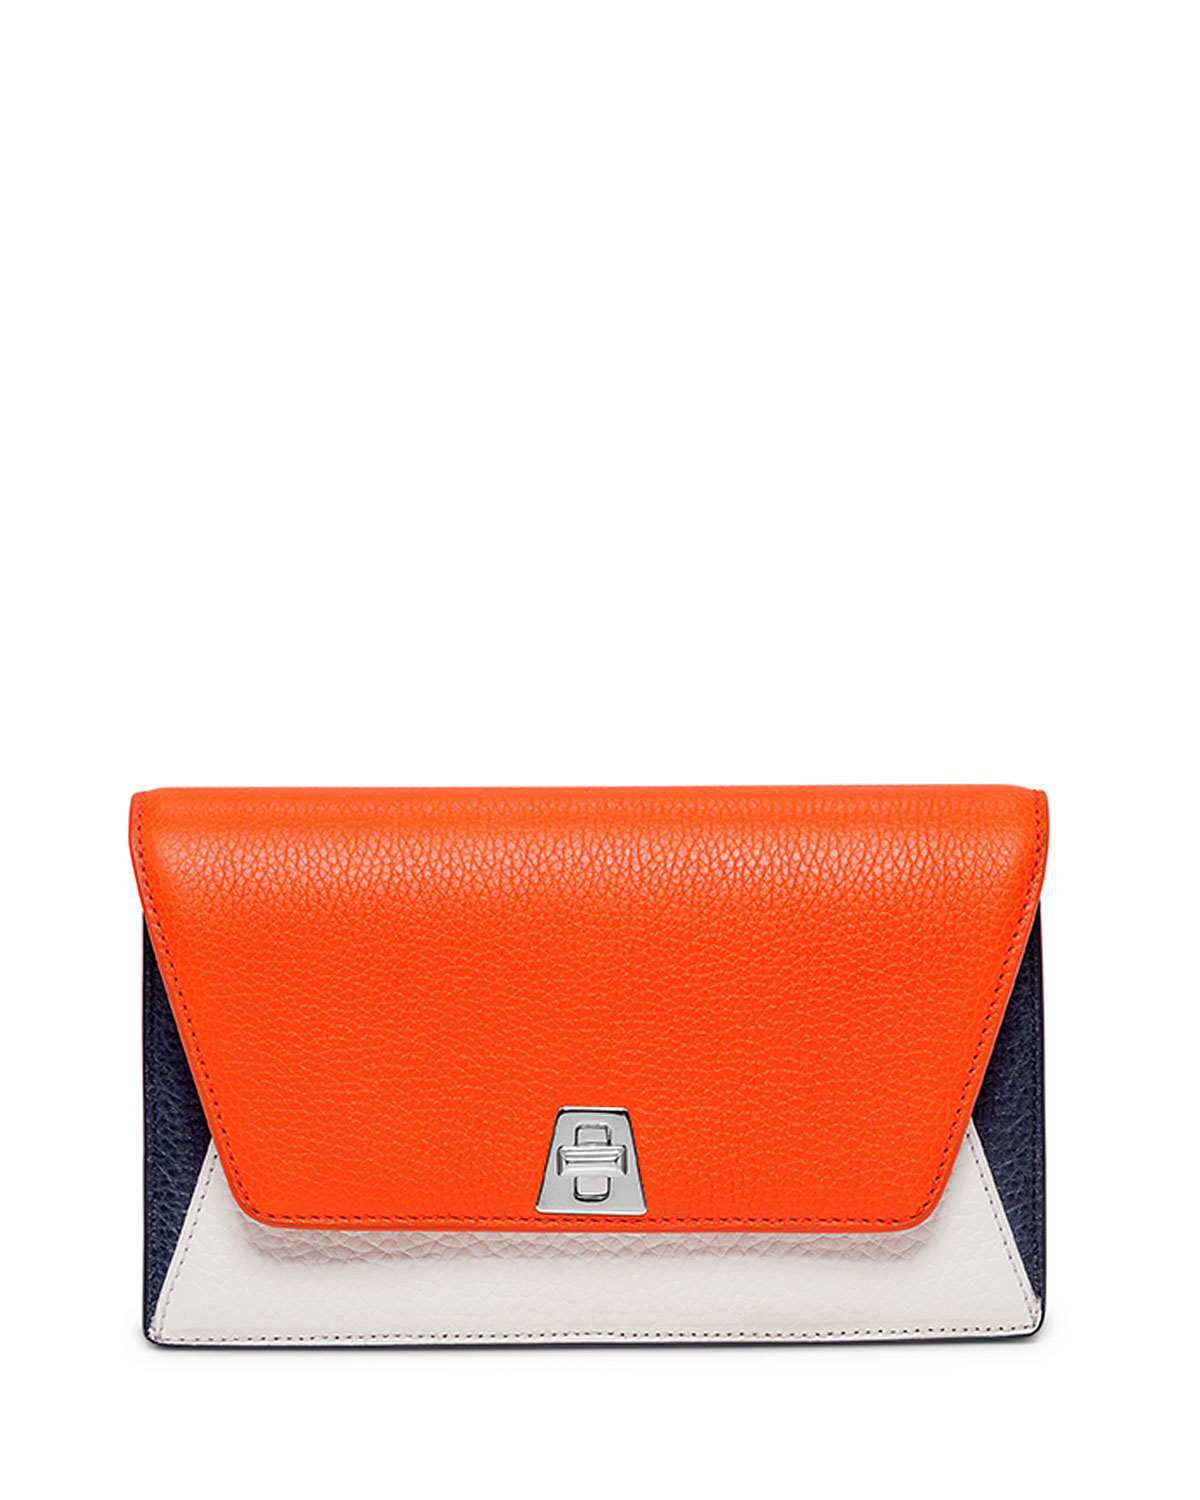 Akris Anouk Leather Chain Envelope Clutch Bag in Orange - Lyst